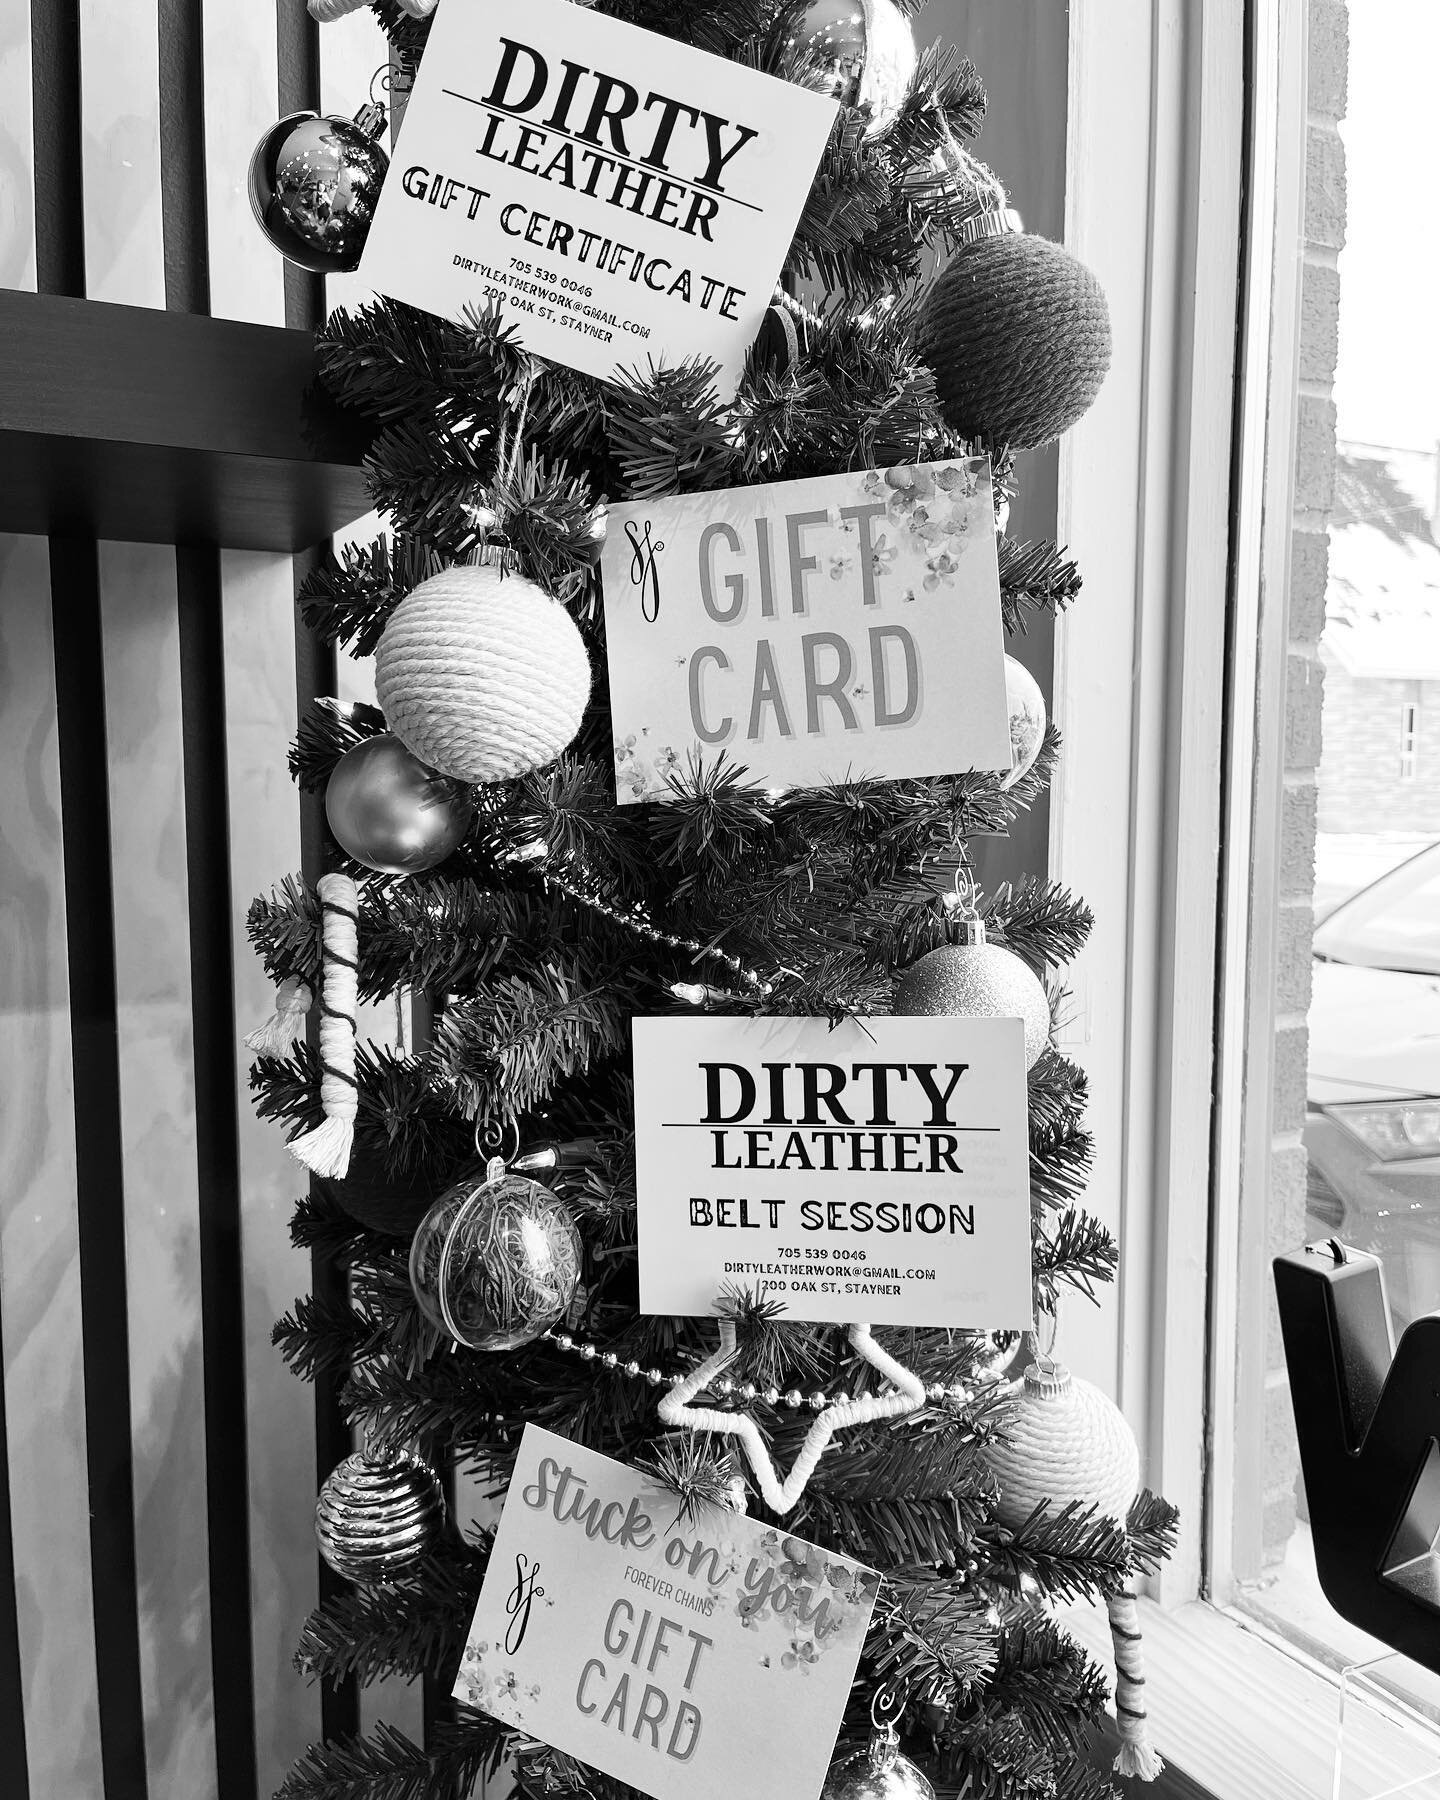 Gift cards for everyone 🎁
&bull;
#madeonoak #handmade #shopdirty #dirtyleather #custombeltsession #stuckonyousfd #soniafaye #giftcards #staynerontario #shoplocal #christmasgiftsforhim #christmasgiftsforher